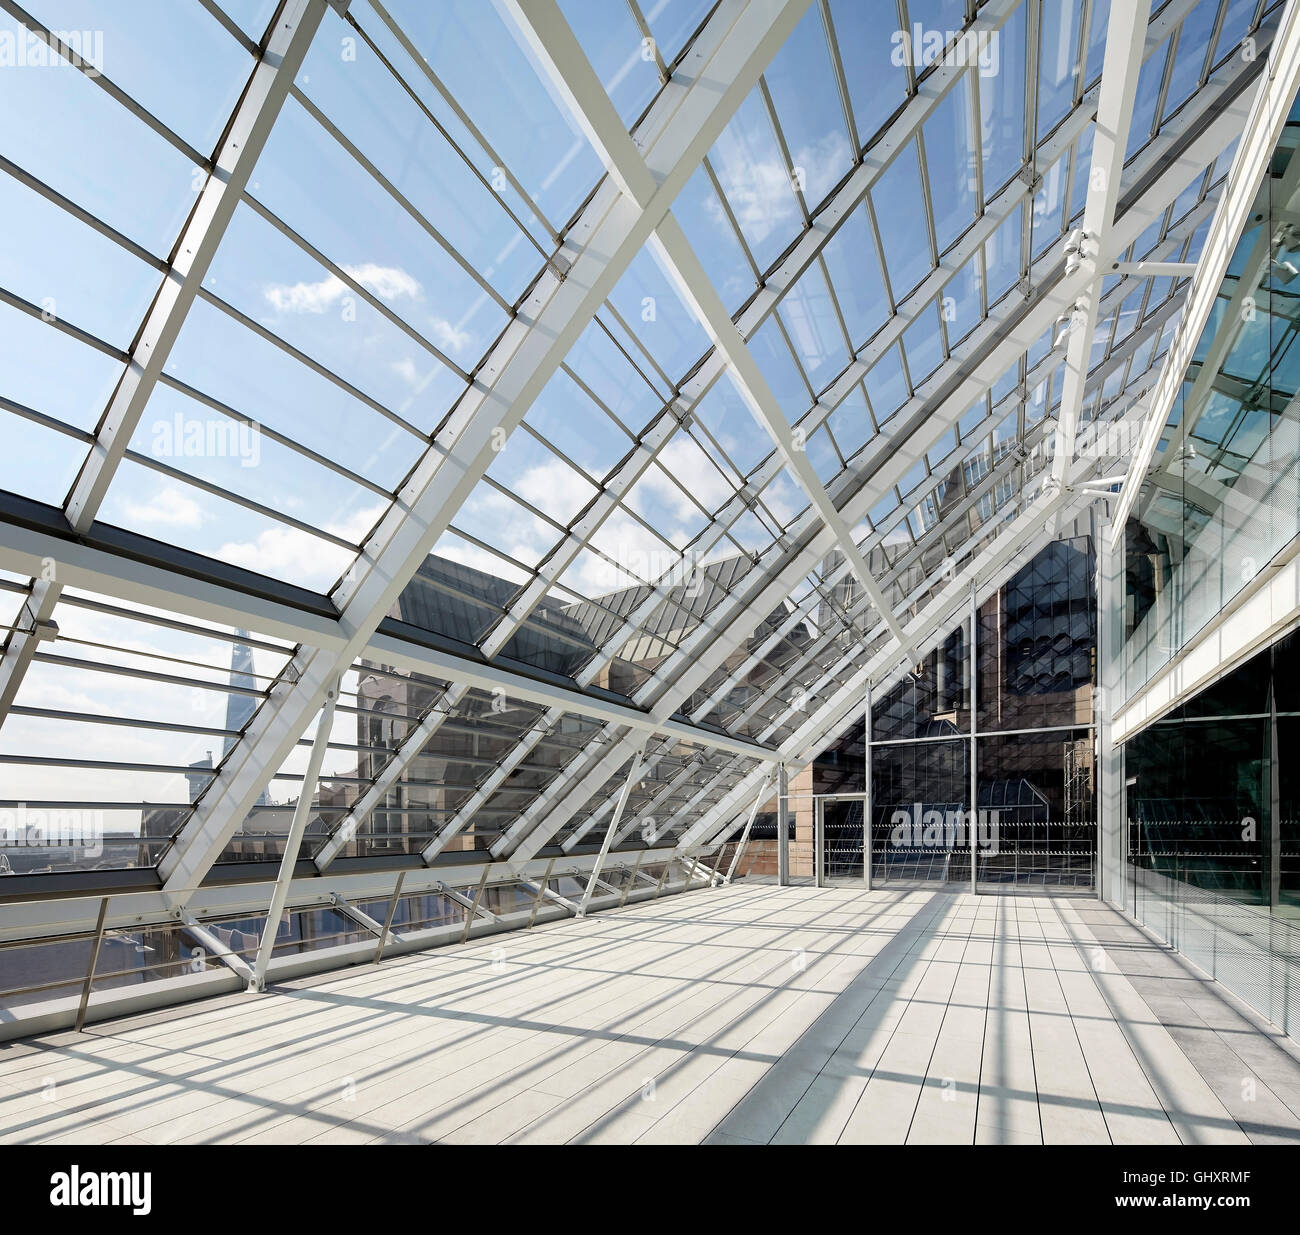 Metall Tragrahmen der Dachverglasung. 70 Mark Lane - City of London, London, Vereinigtes Königreich. Architekt: Bennetts Associates Architects, 2015. Stockfoto